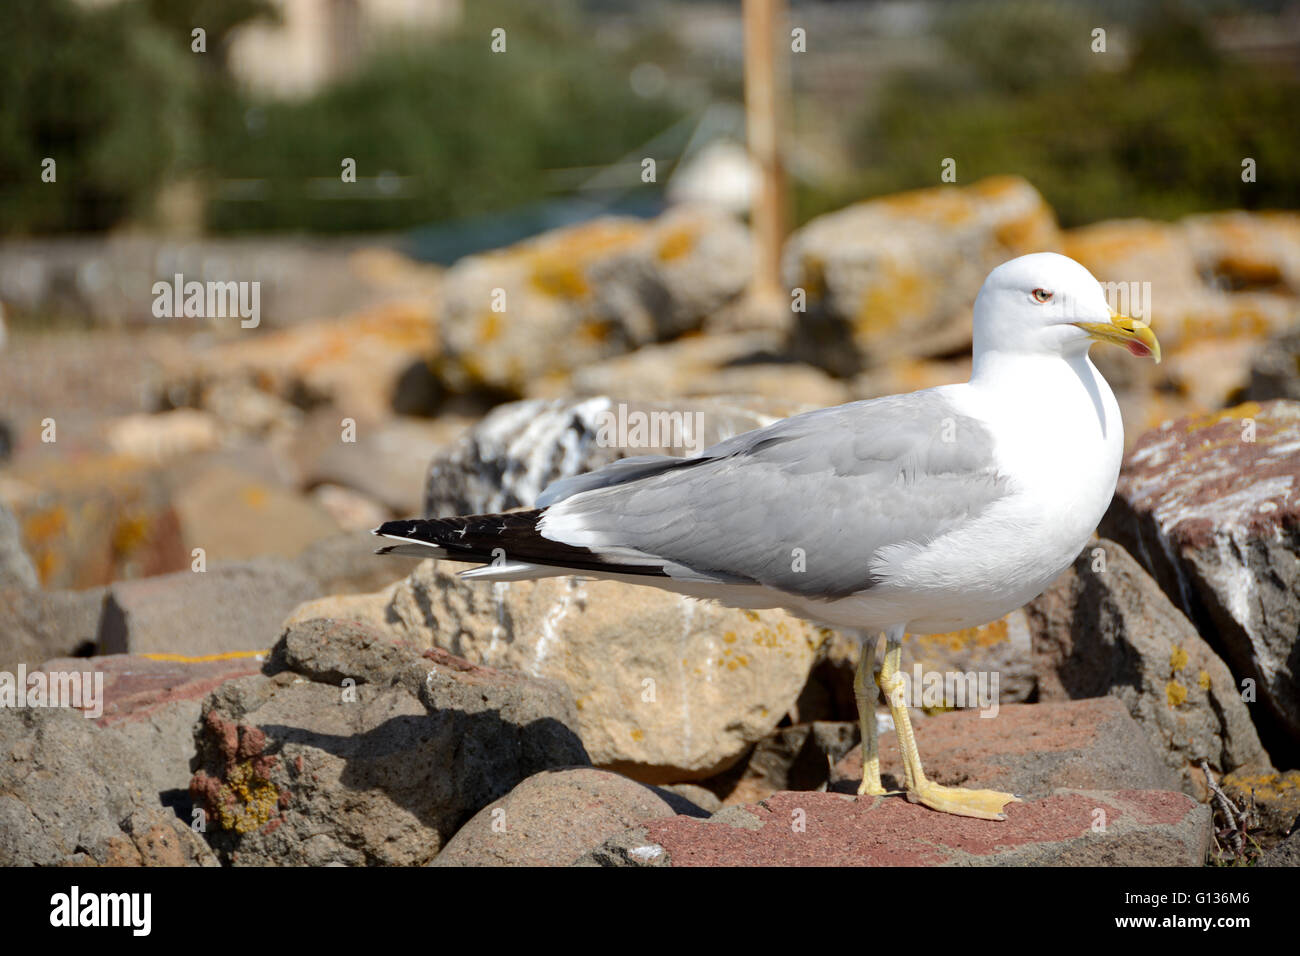 Yellow-legged gull standing on a rock Stock Photo